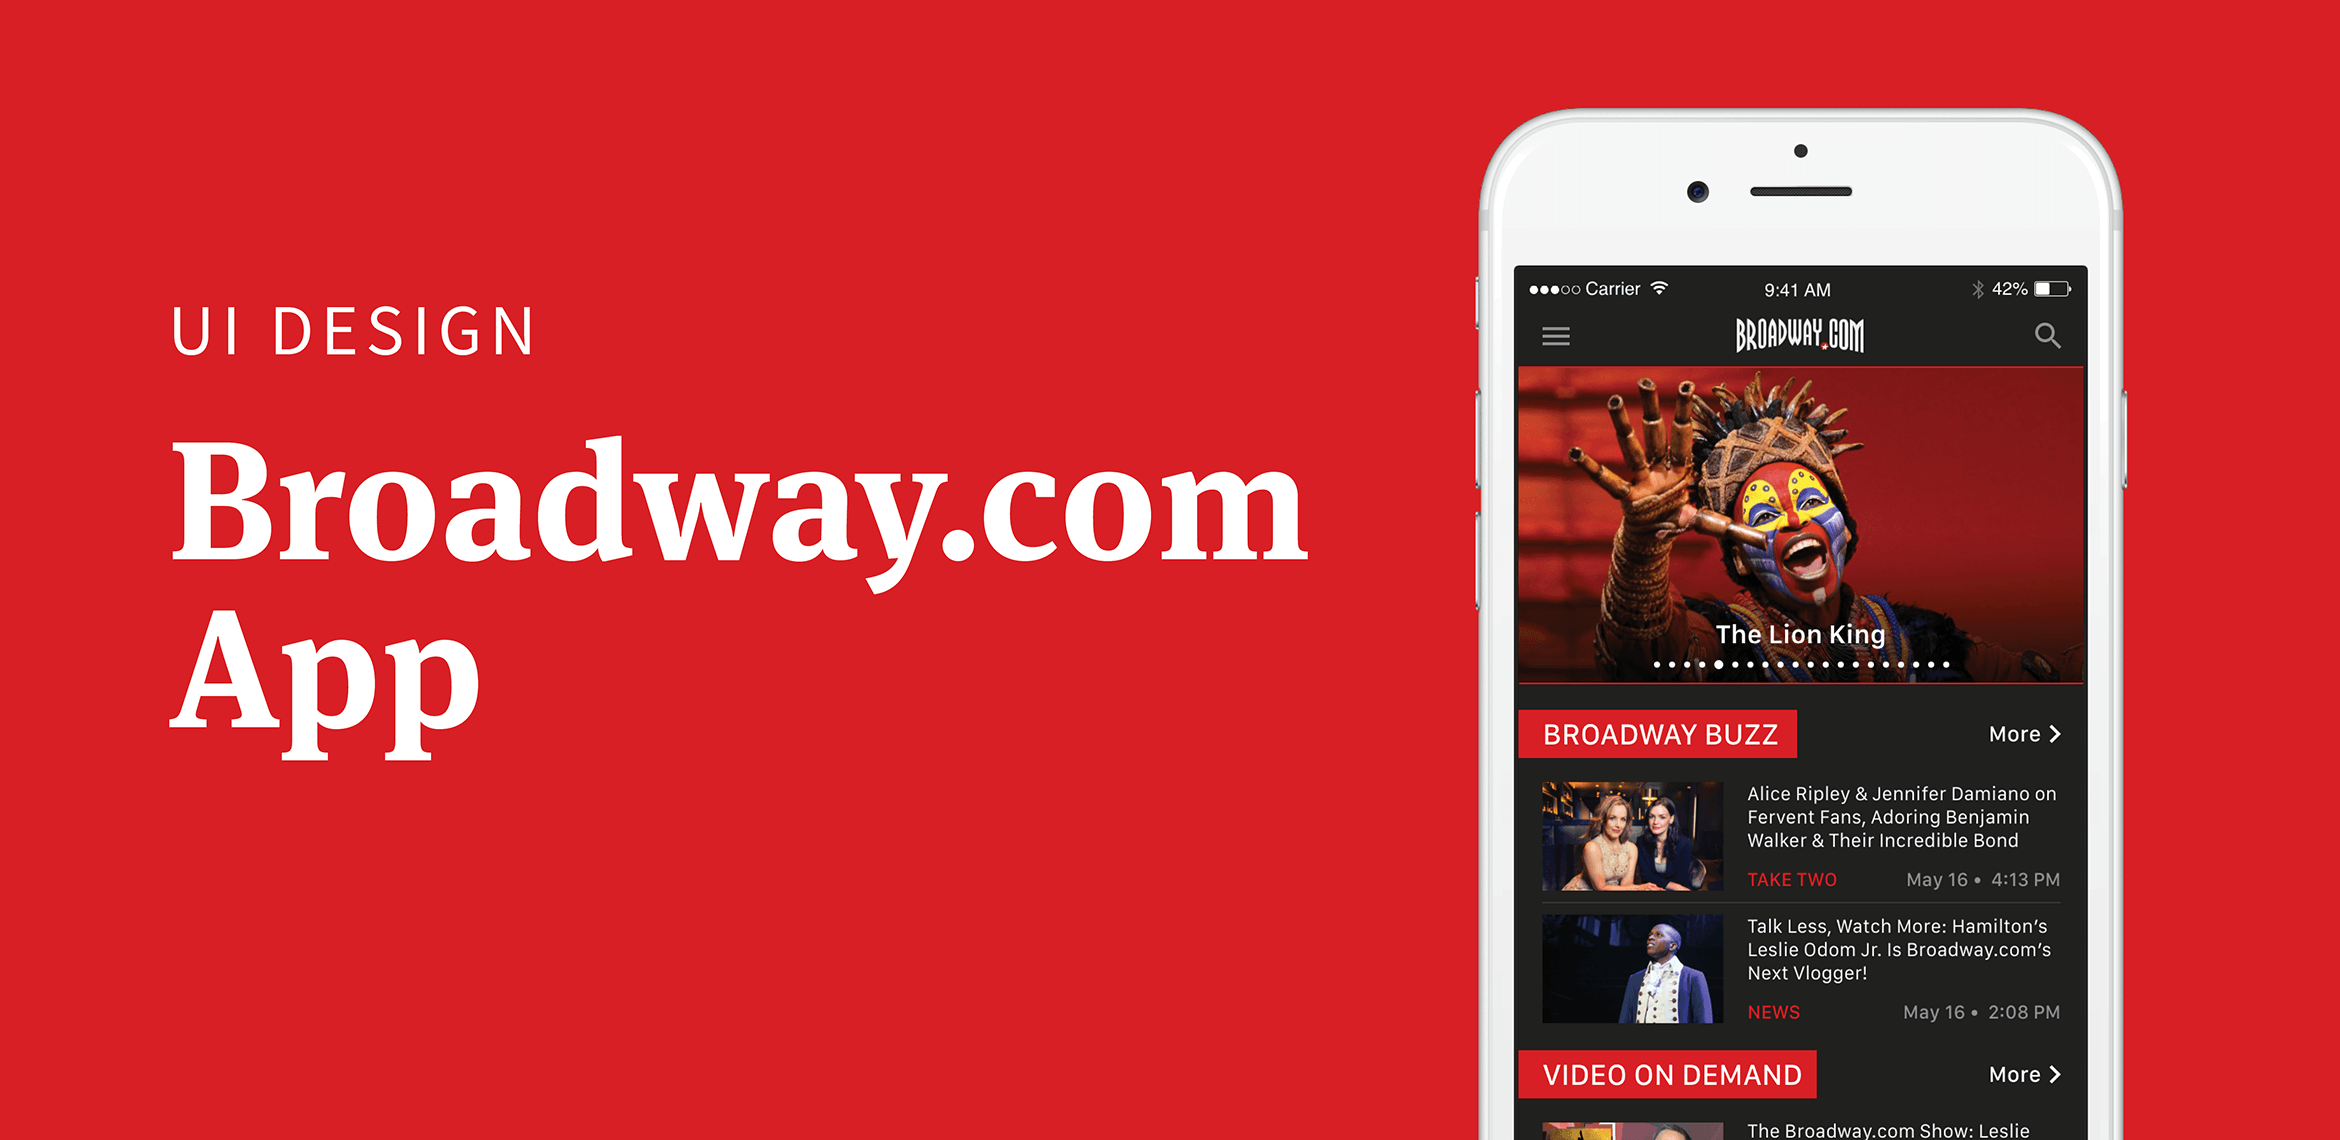 Broadway.com App